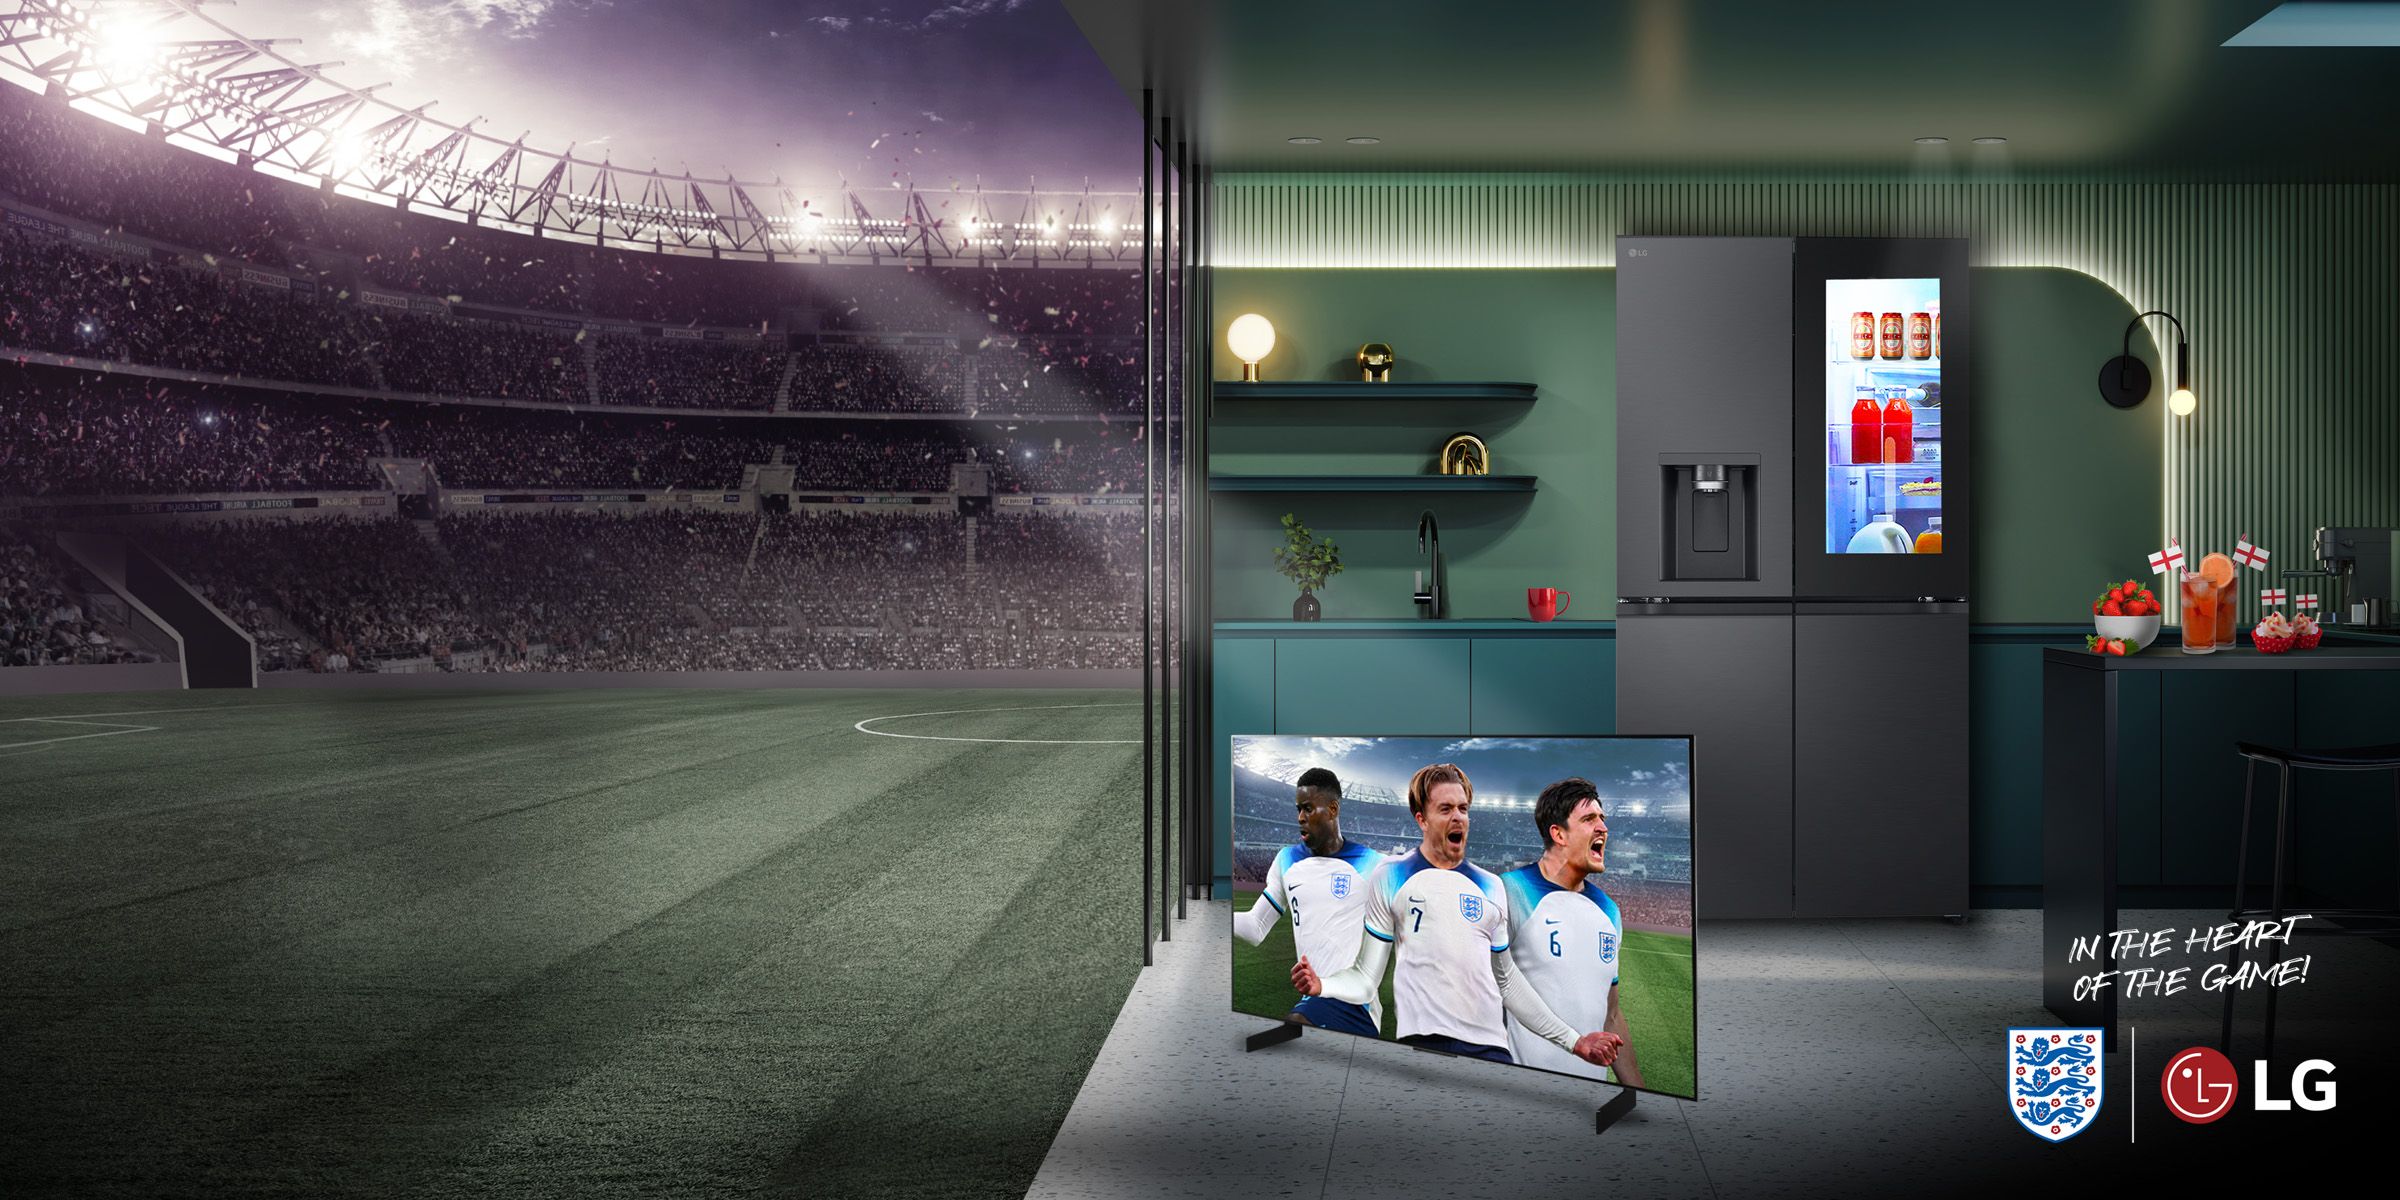 LG Fridge and TV in a VIP box at a football stadium